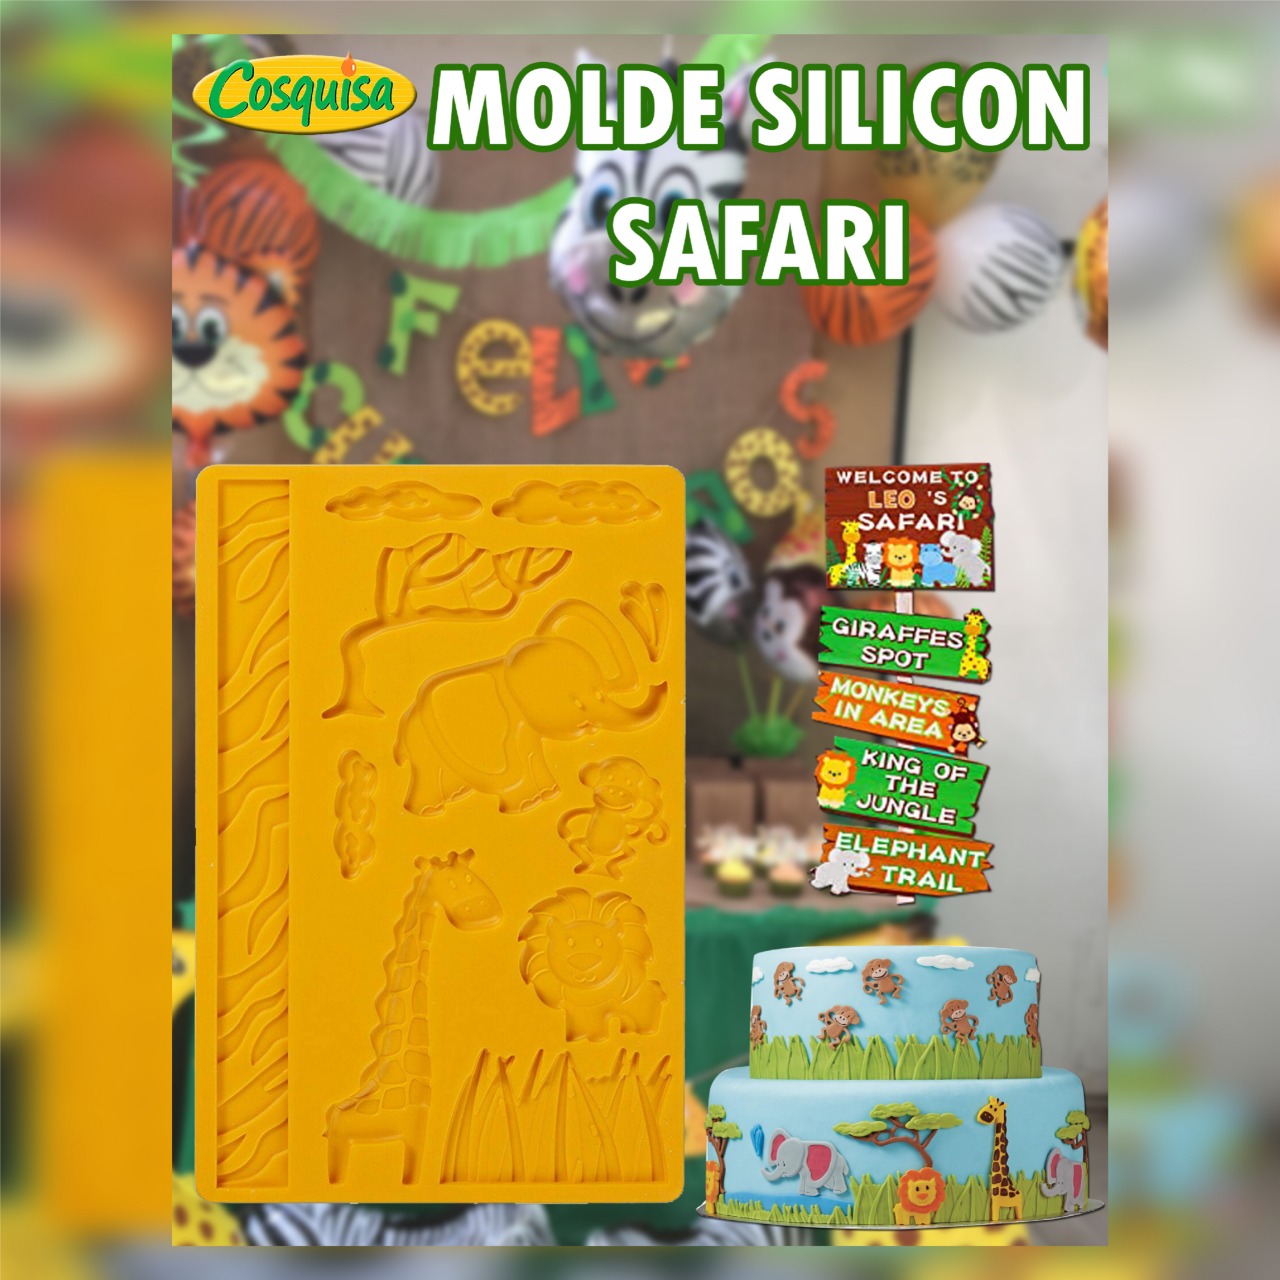 molde silicon safari